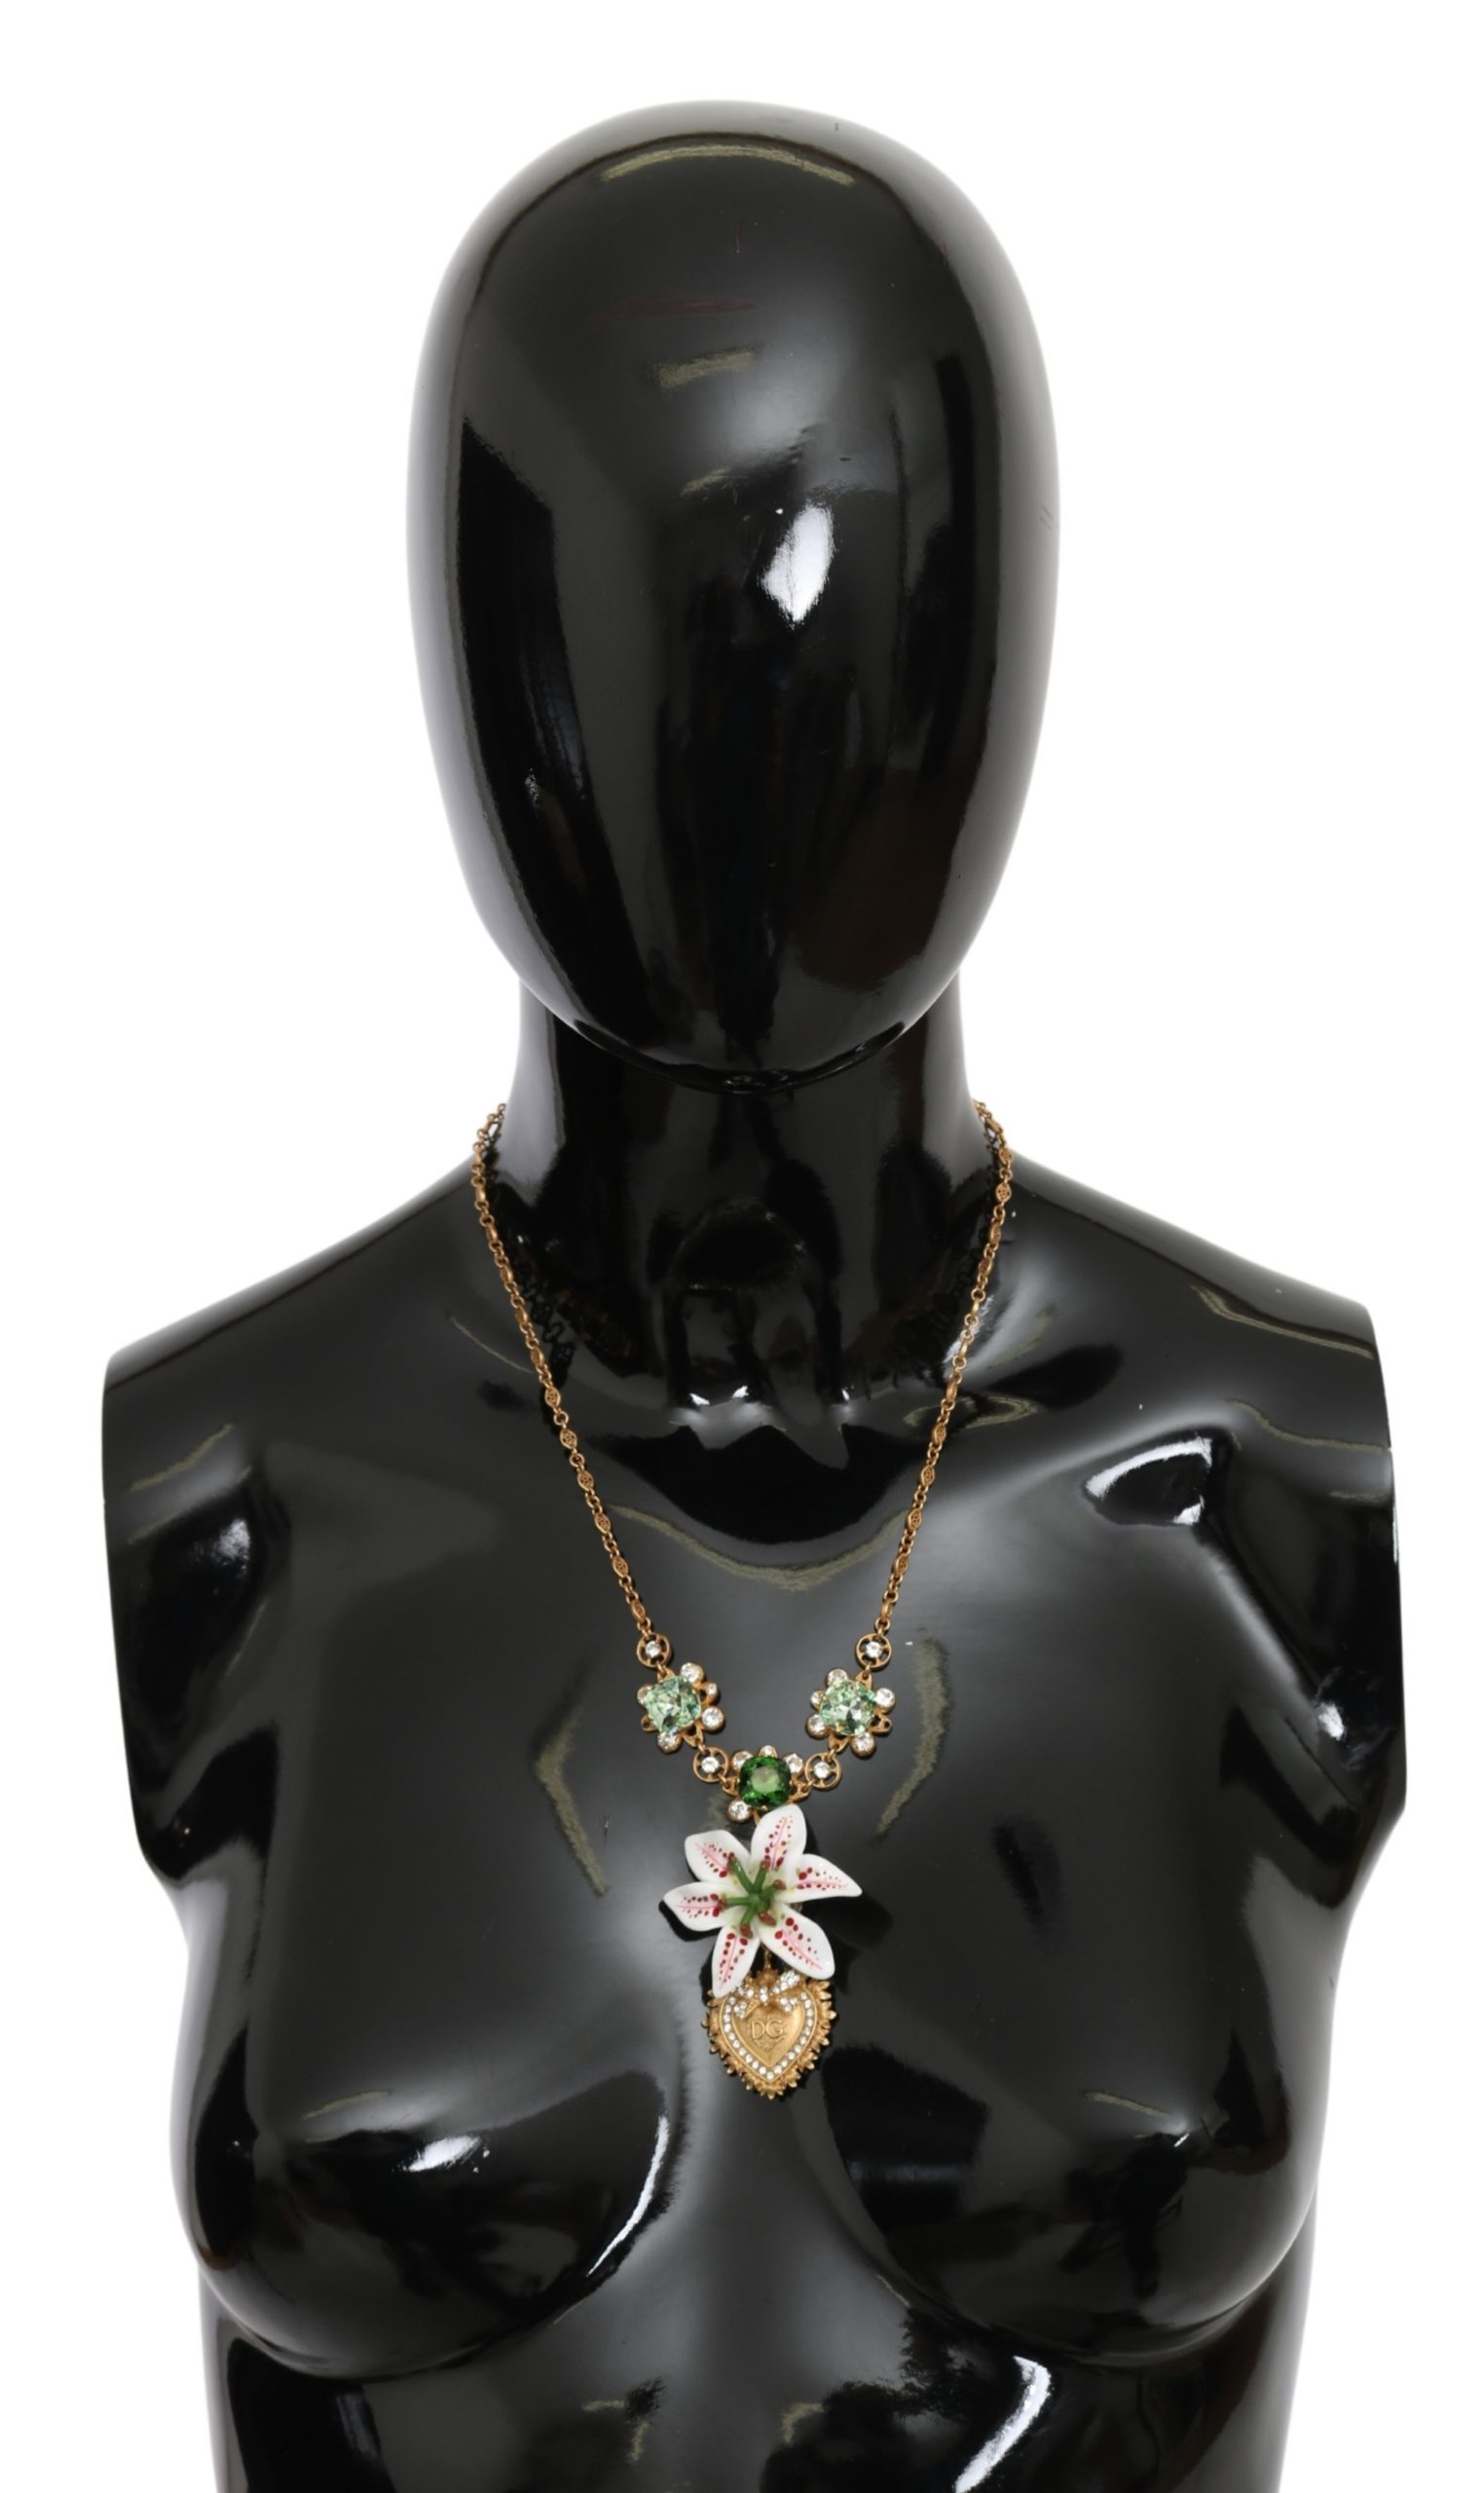 Dolce & Gabbana Women's LILIUM Crystal Charm Necklace Gold SMY10069